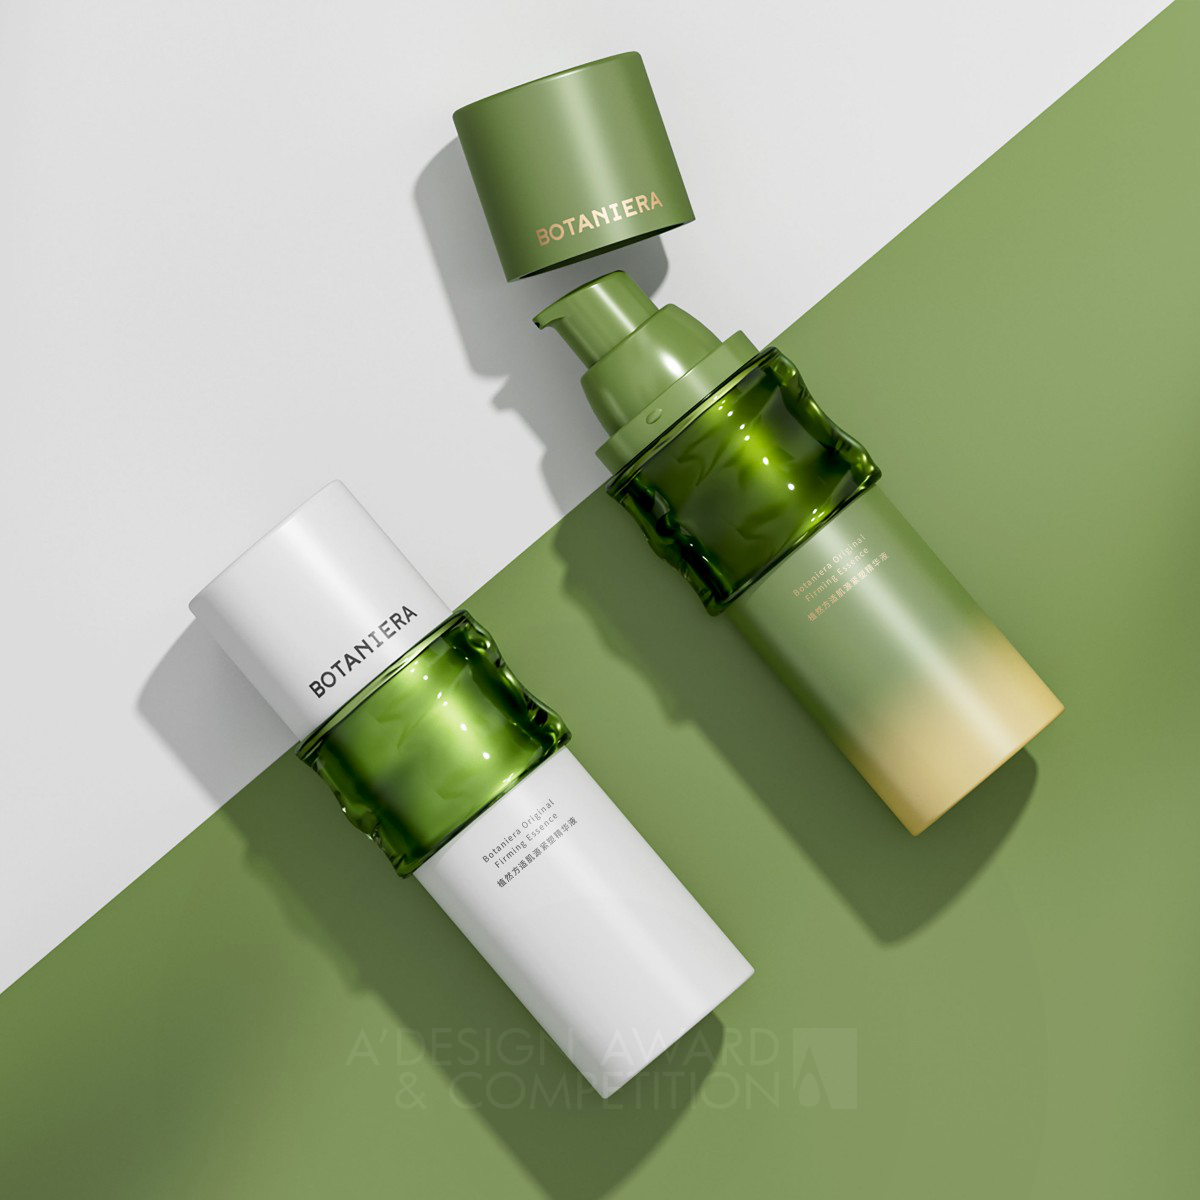 Botaniera Original Firming Essence Skin Care Packaging by Chun Xue Creative Design Bronze Packaging Design Award Winner 2024 